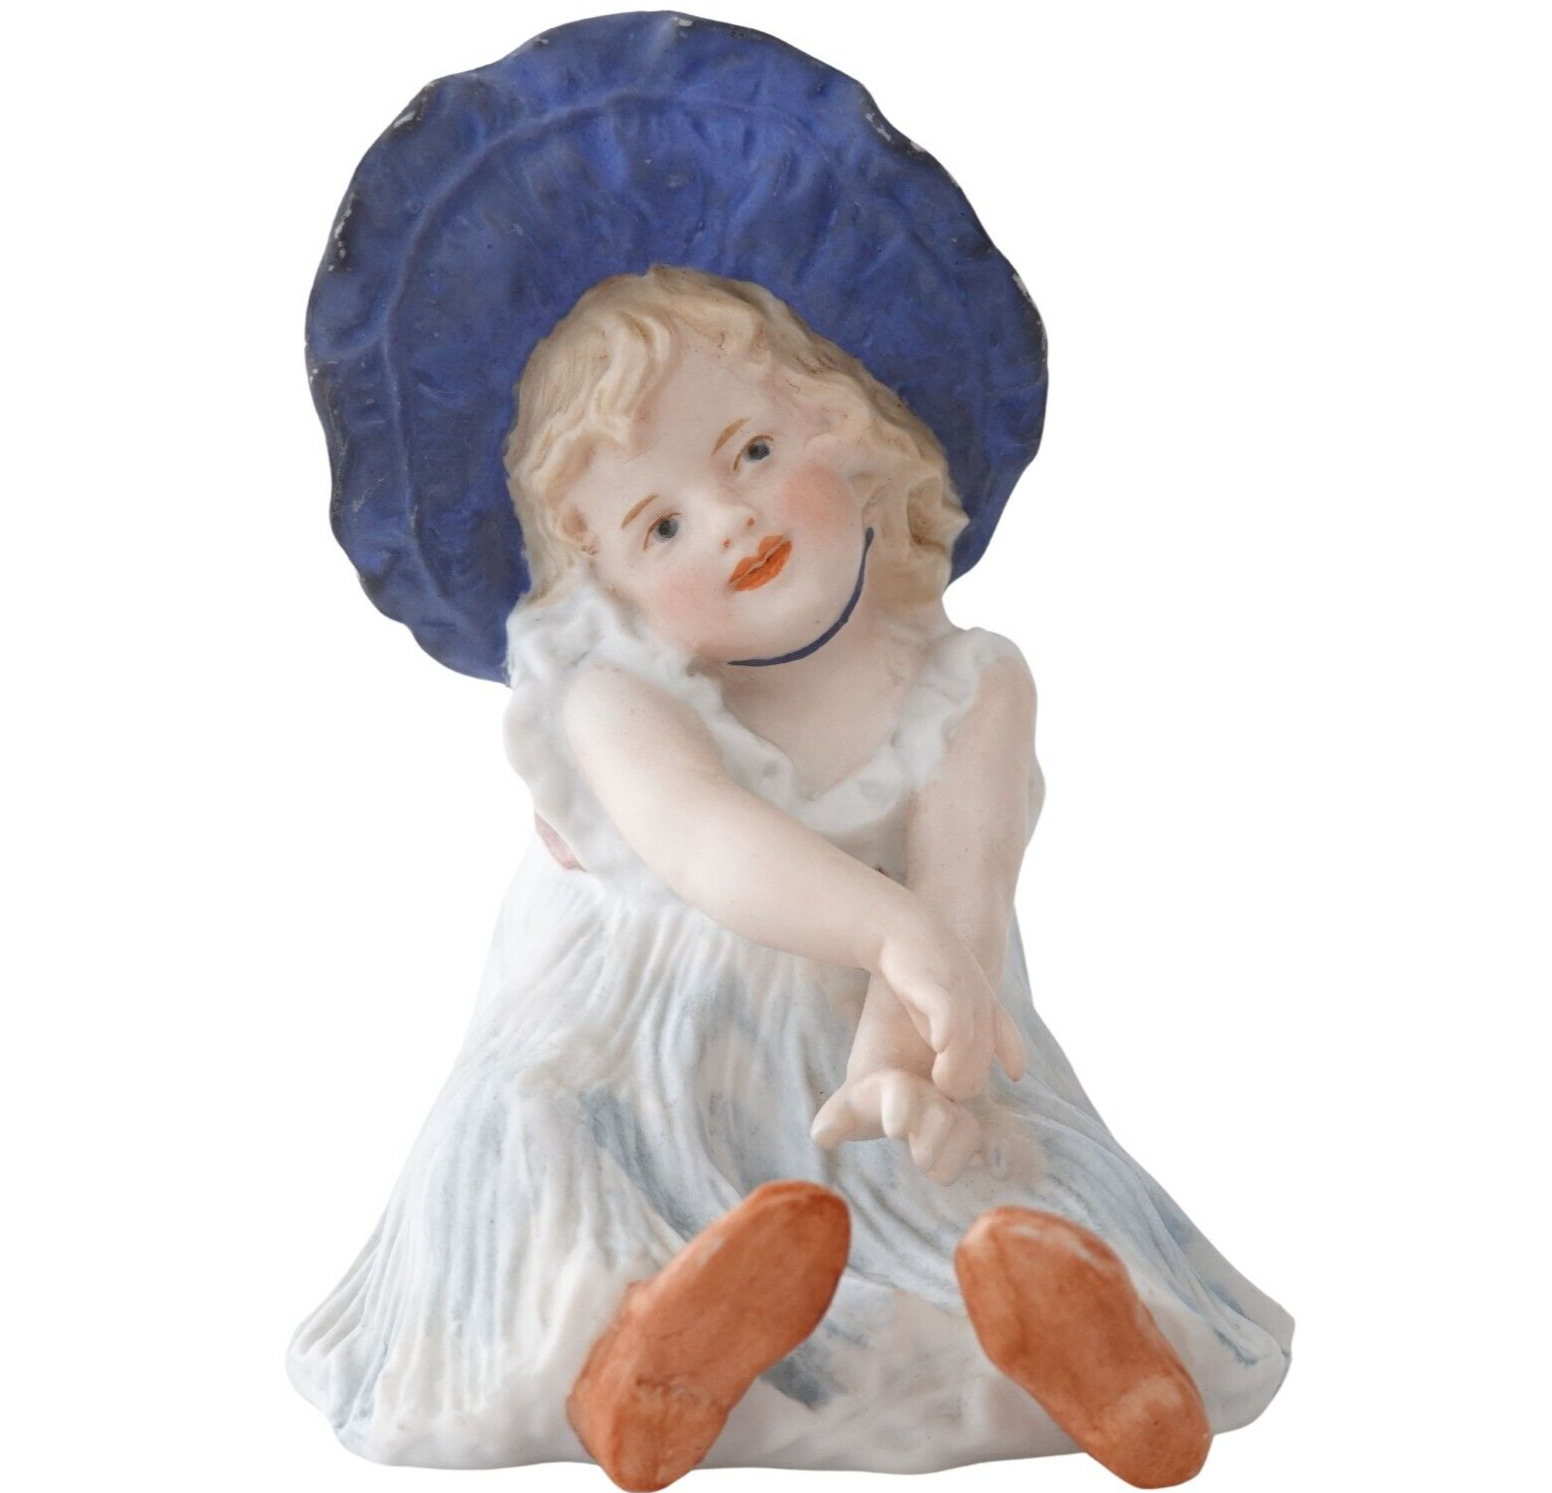 Antique Gebruder Heubach Bonnet Girl Piano Baby Figurine